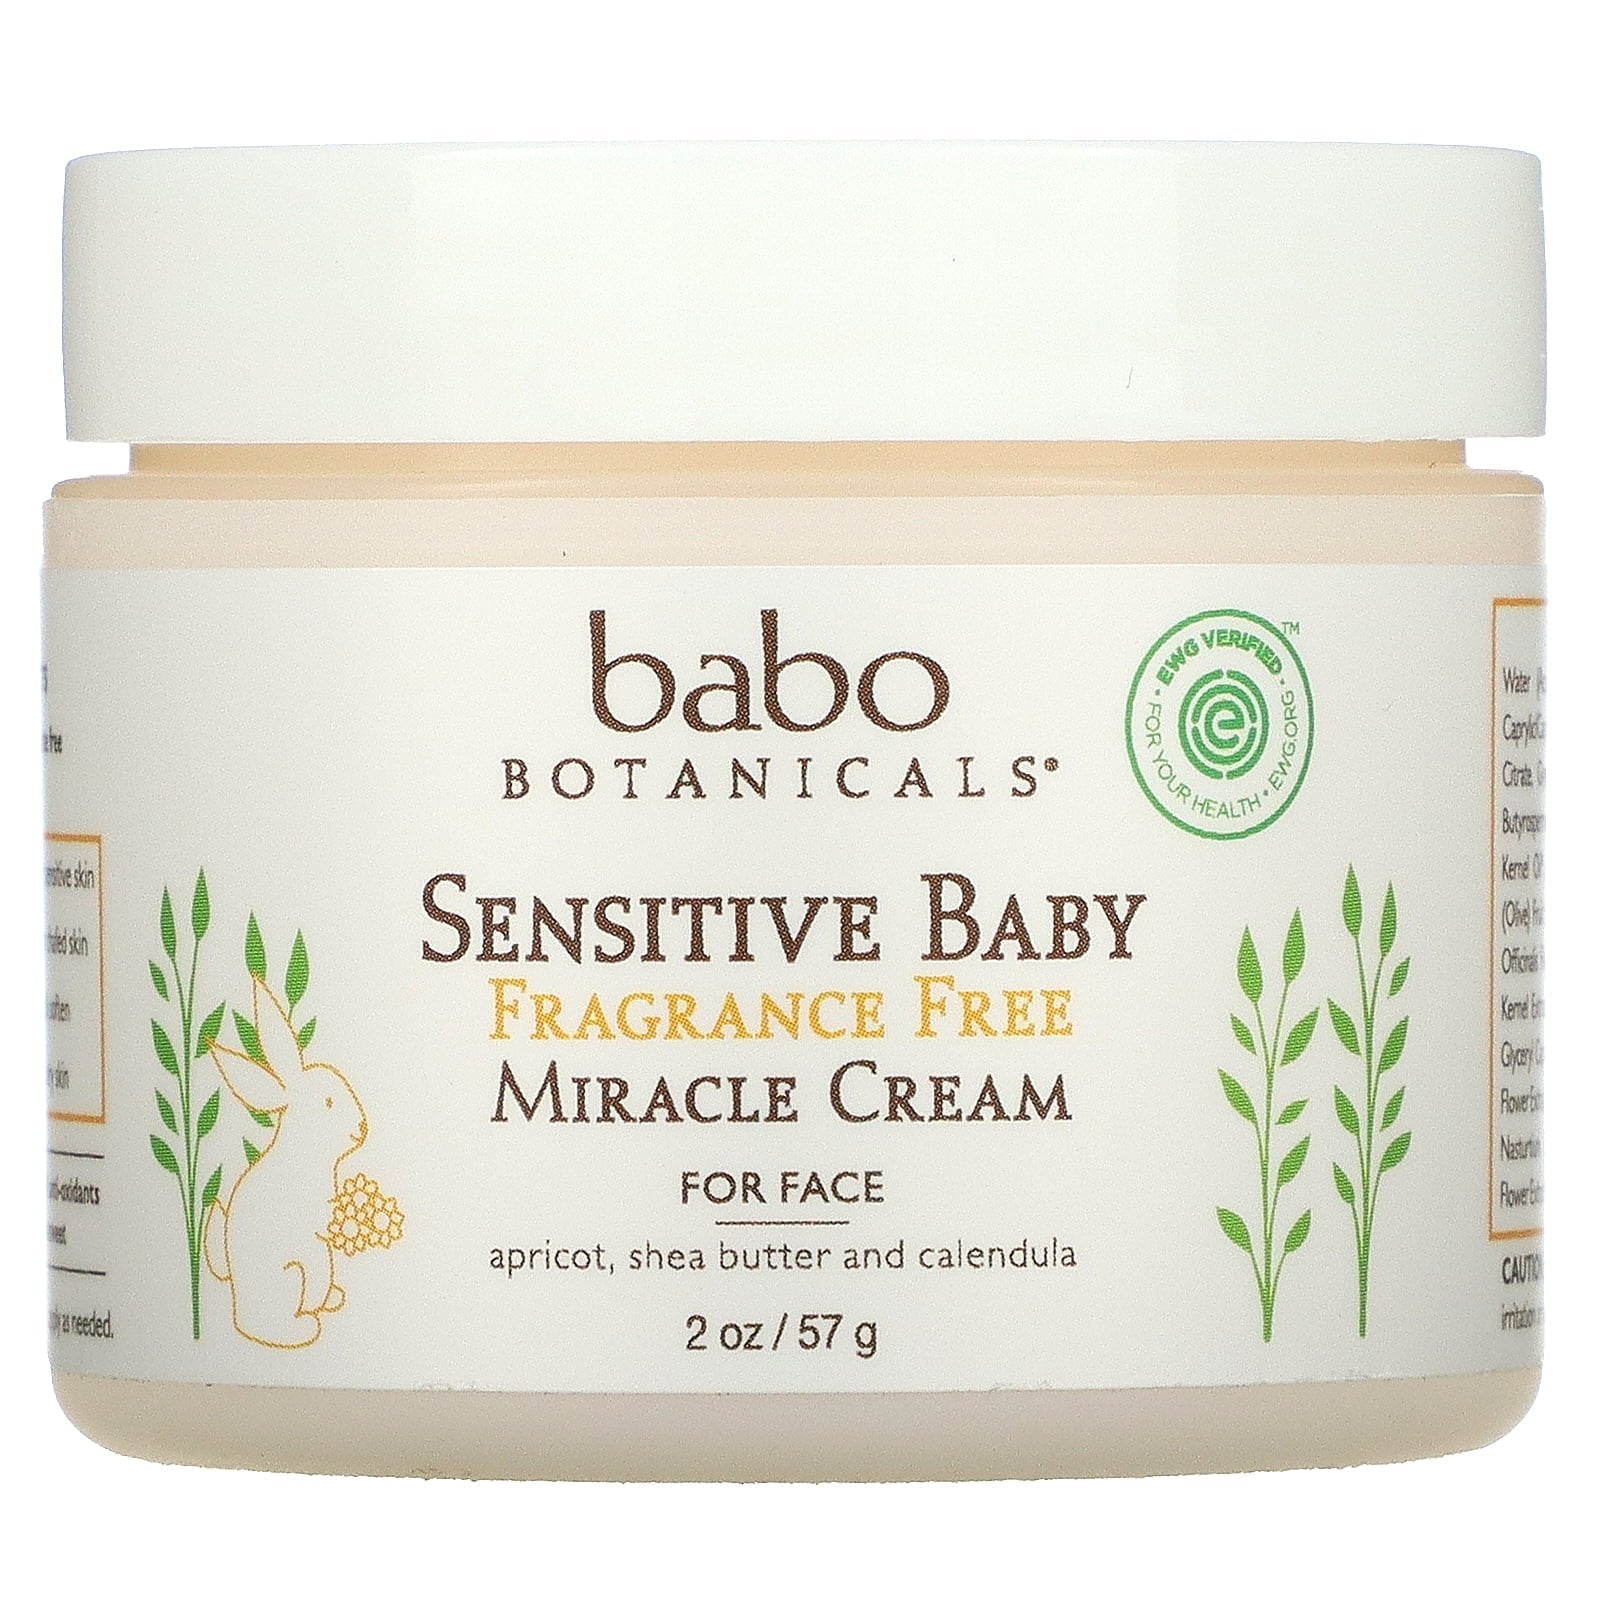 Babo Botanicals Sensitive Baby Miracle Cream Fragrance Free 2 oz Jar